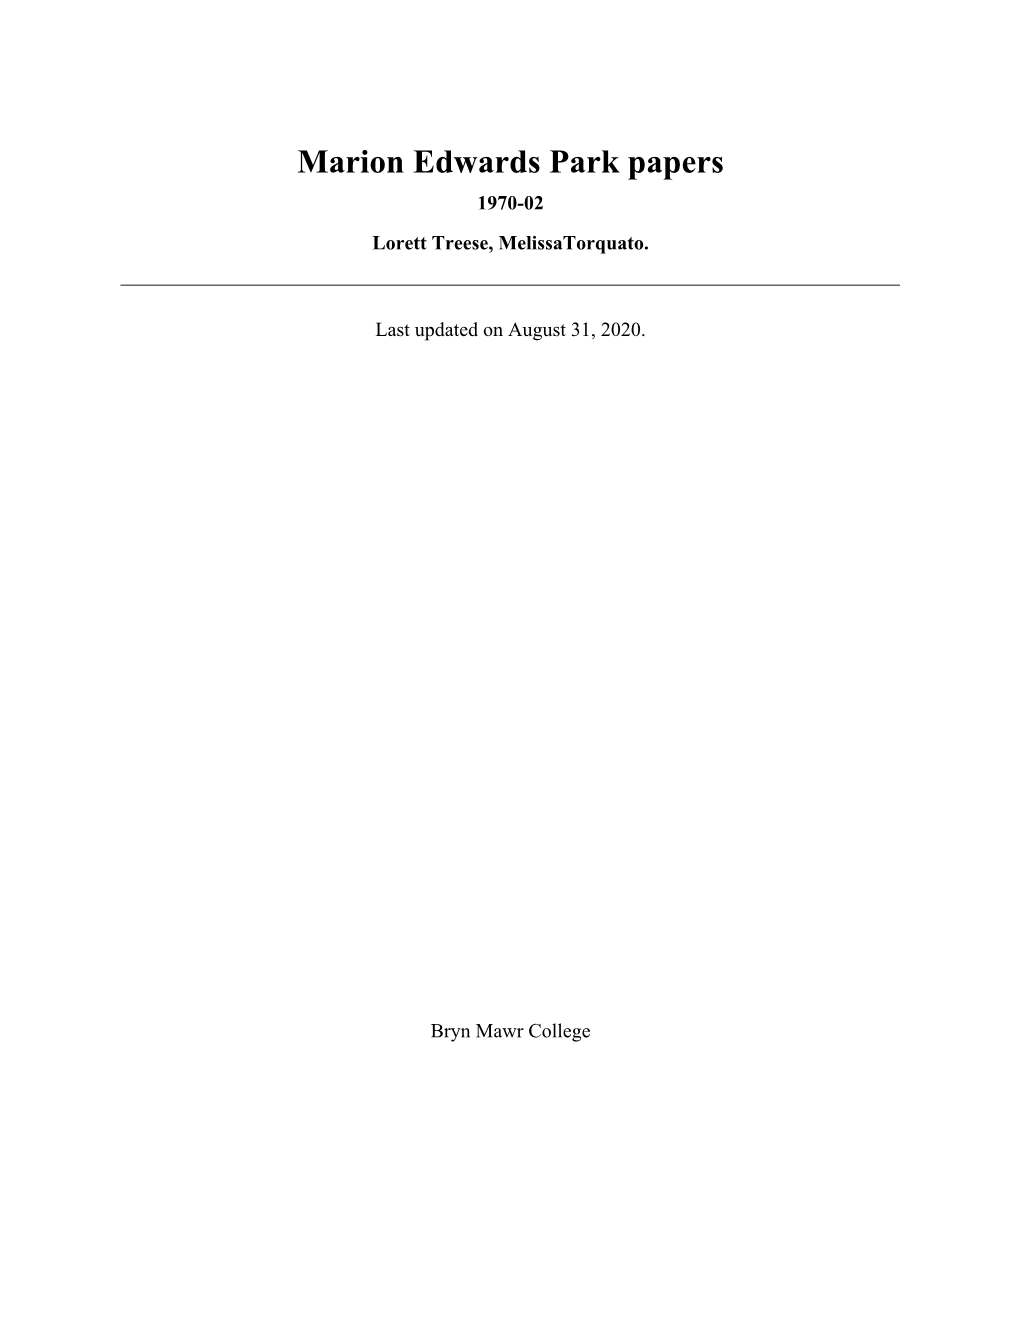 Marion Edwards Park Papers 1970-02 Lorett Treese, Melissatorquato